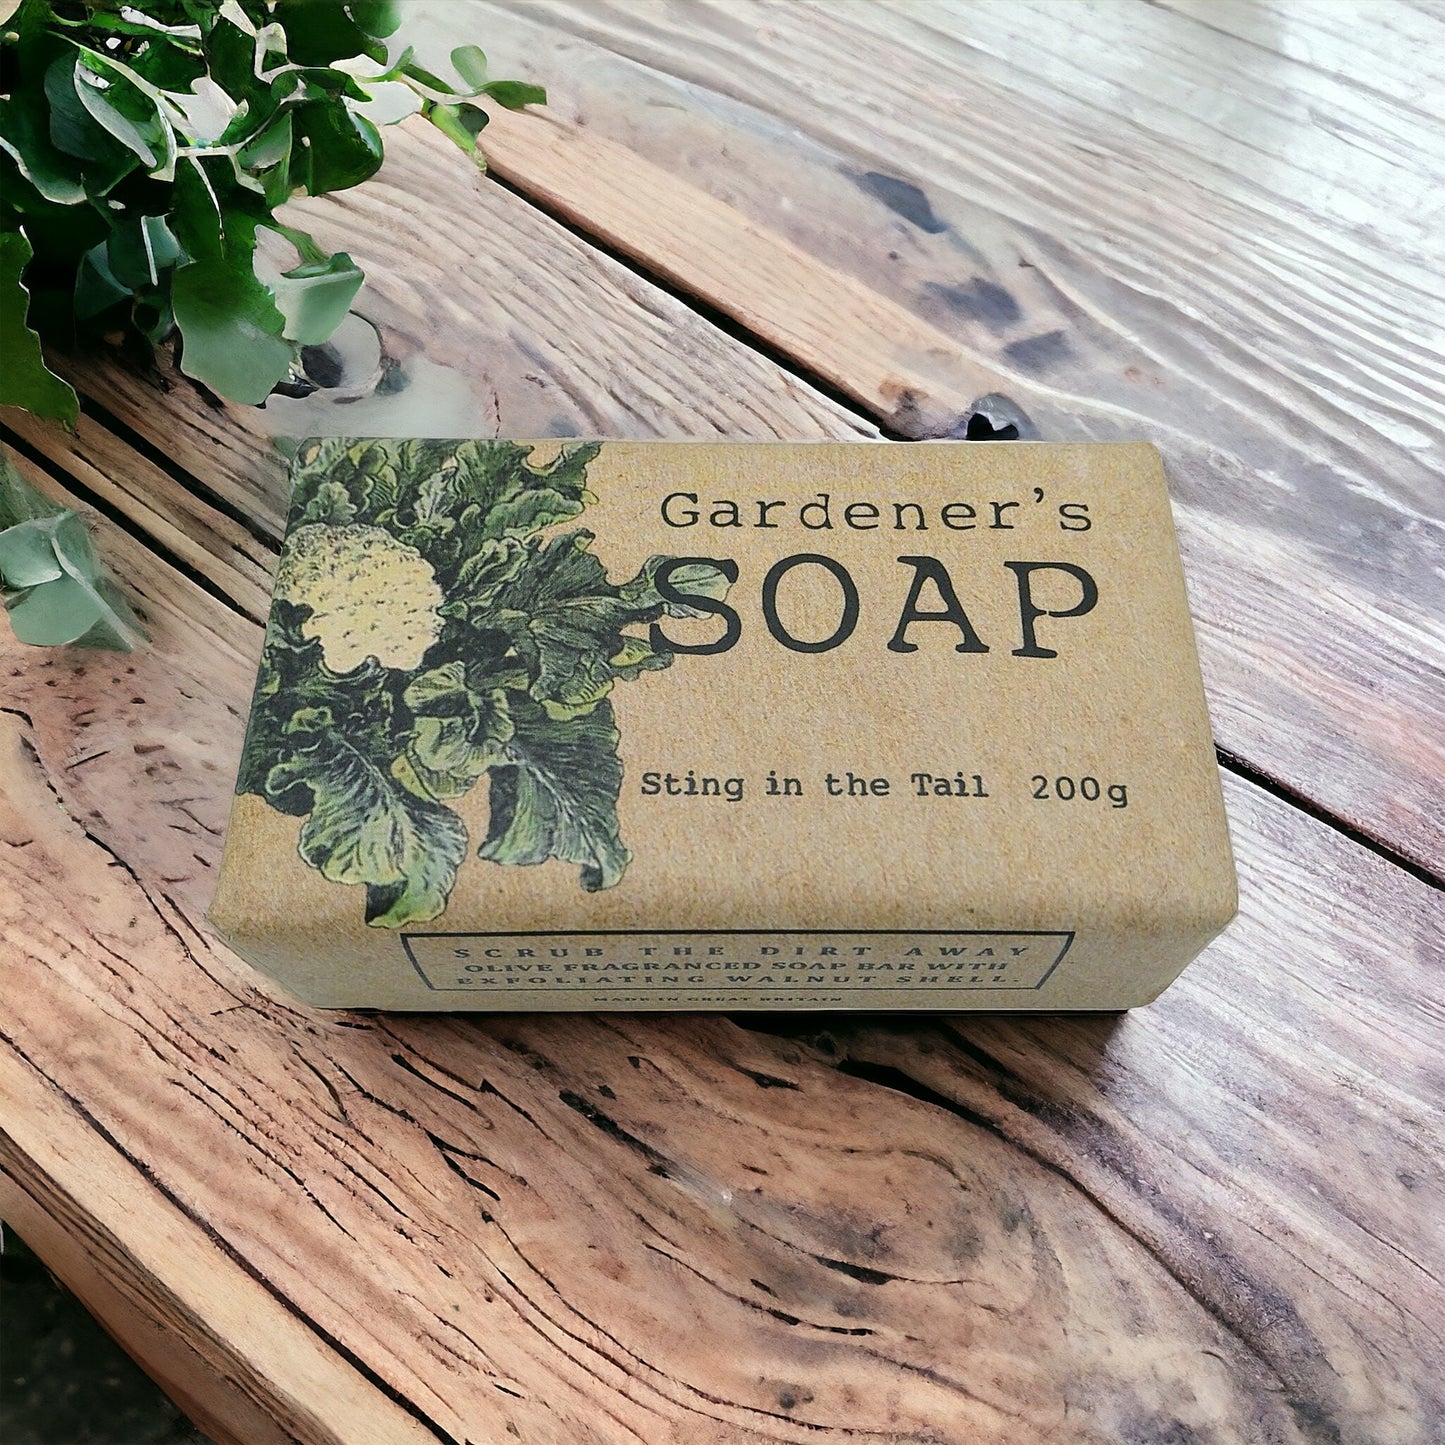 Gardener's Exfoliating Soap | Gift for a Gardener | Olive Fragrance with Exfoliating Walnut Shell | Gardener’s Soap